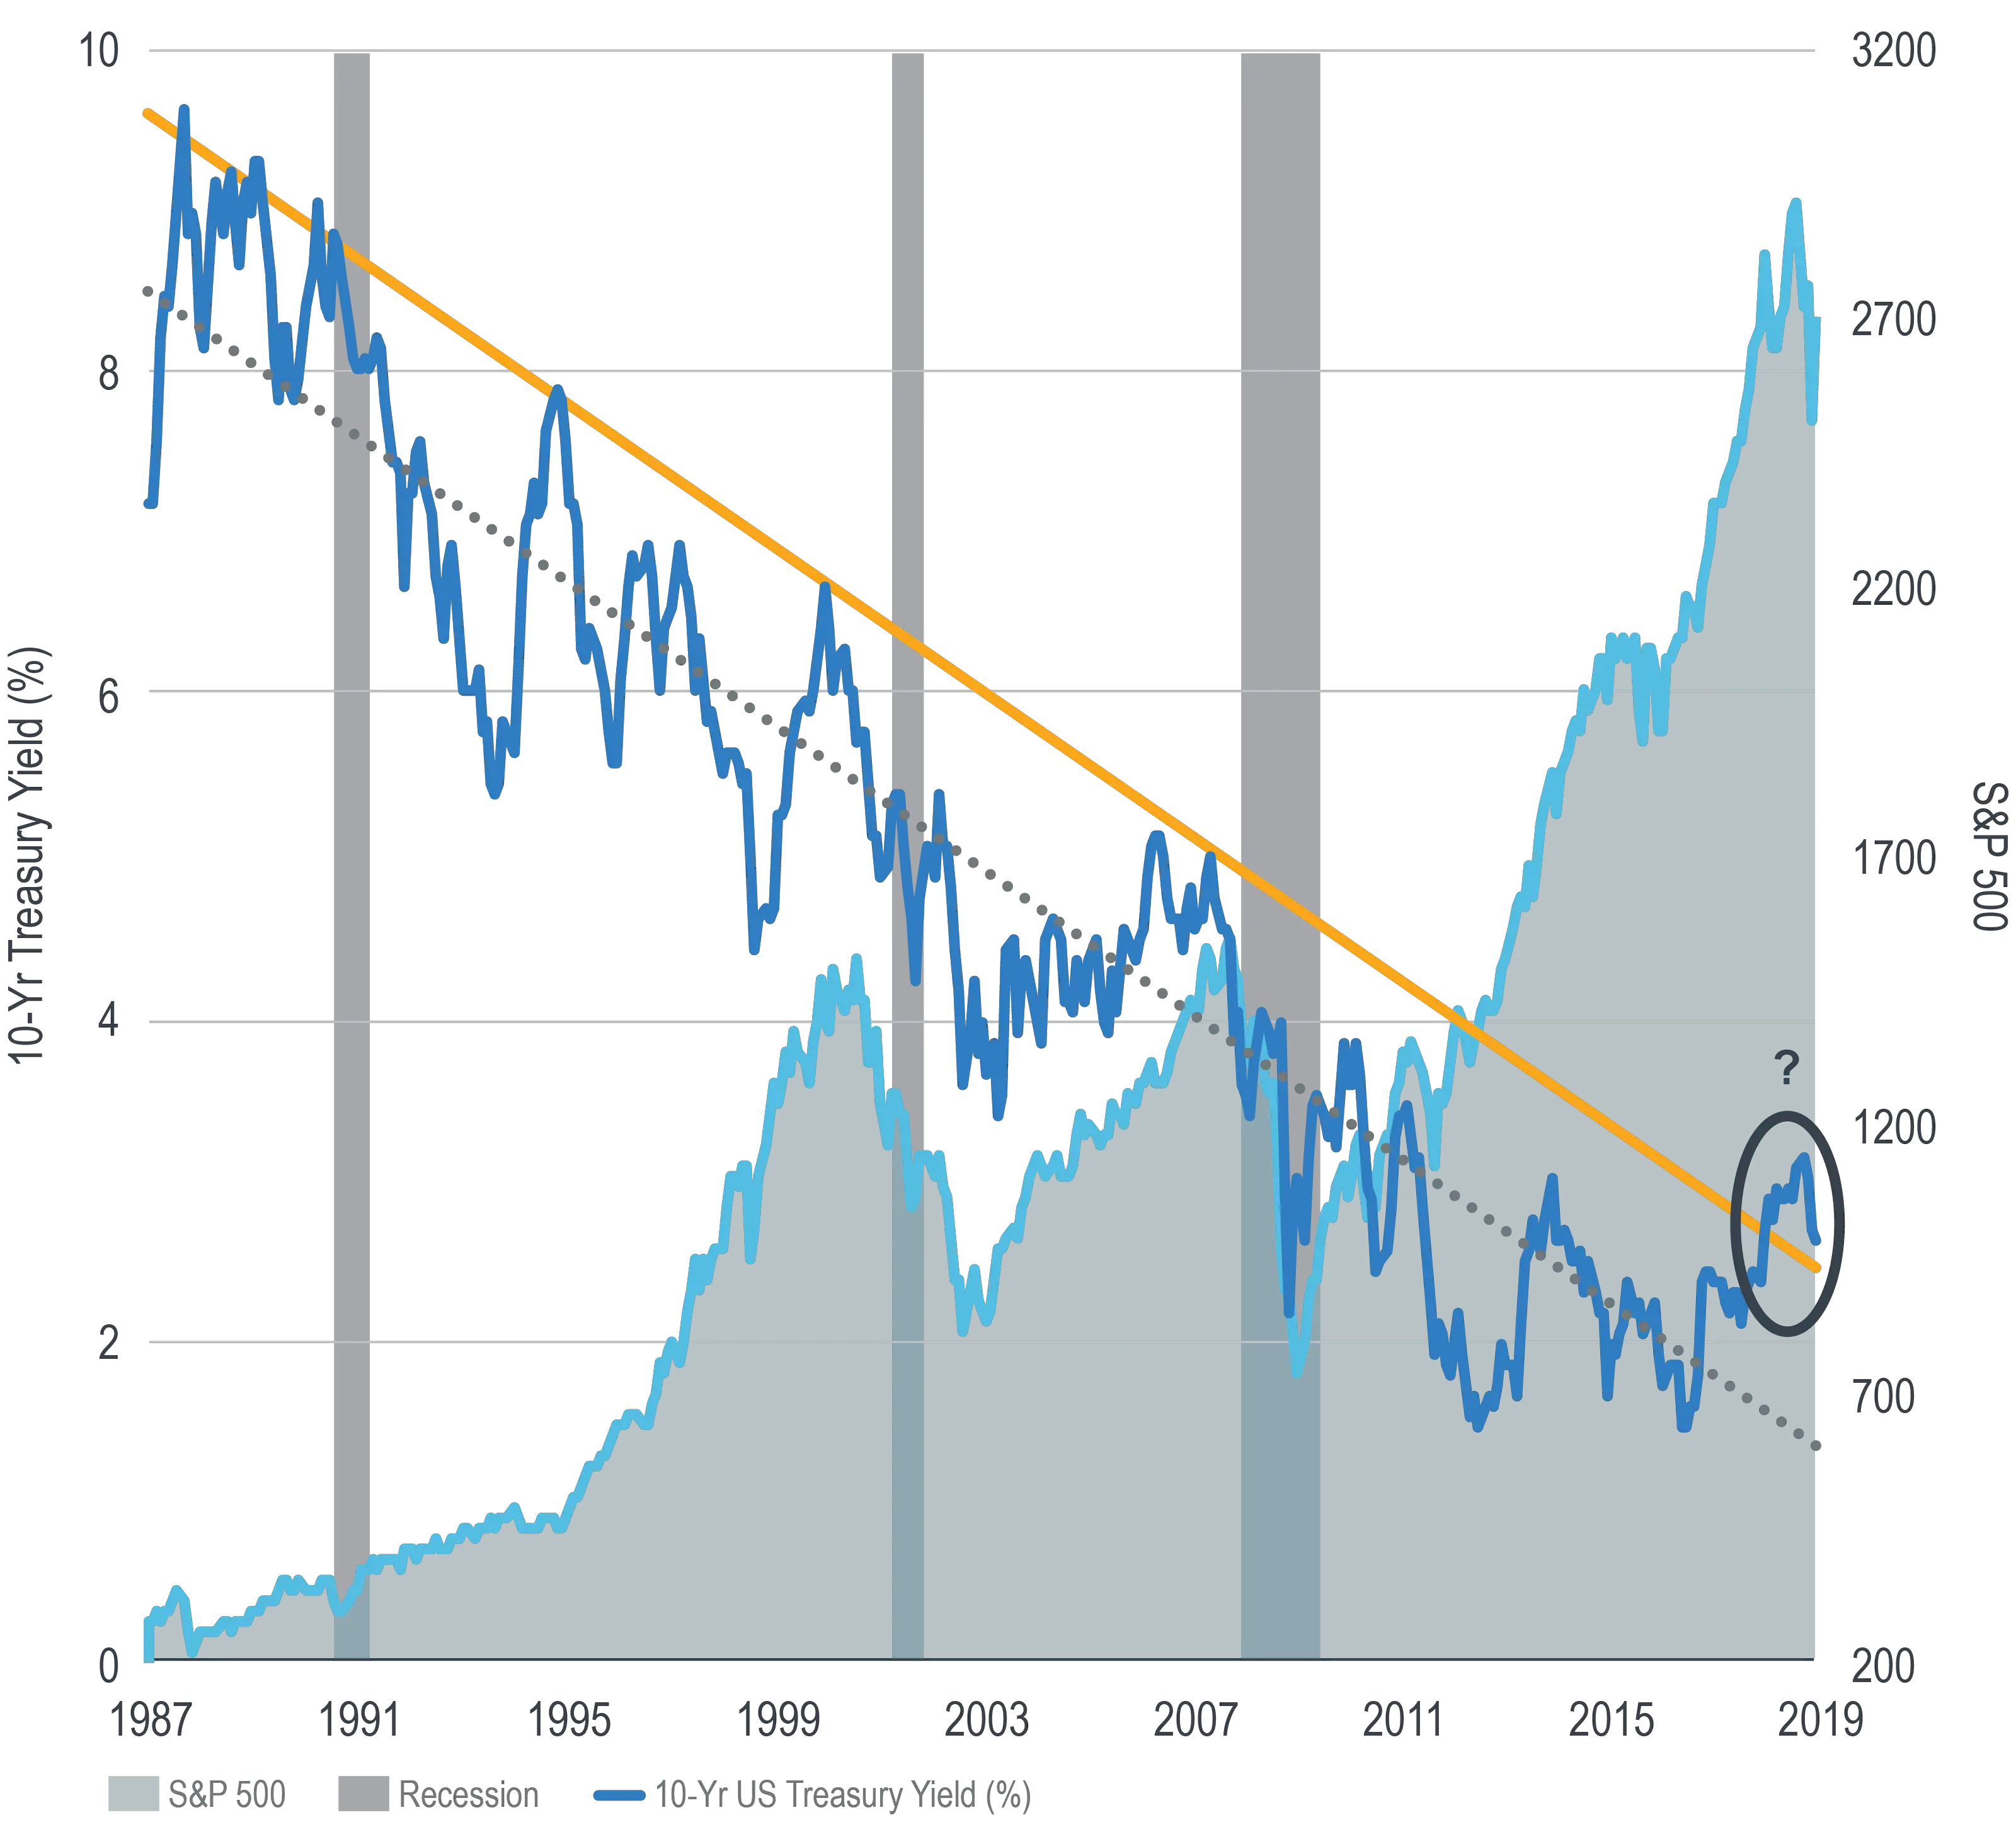 Us 10 Year Bond Yield Chart Bloomberg